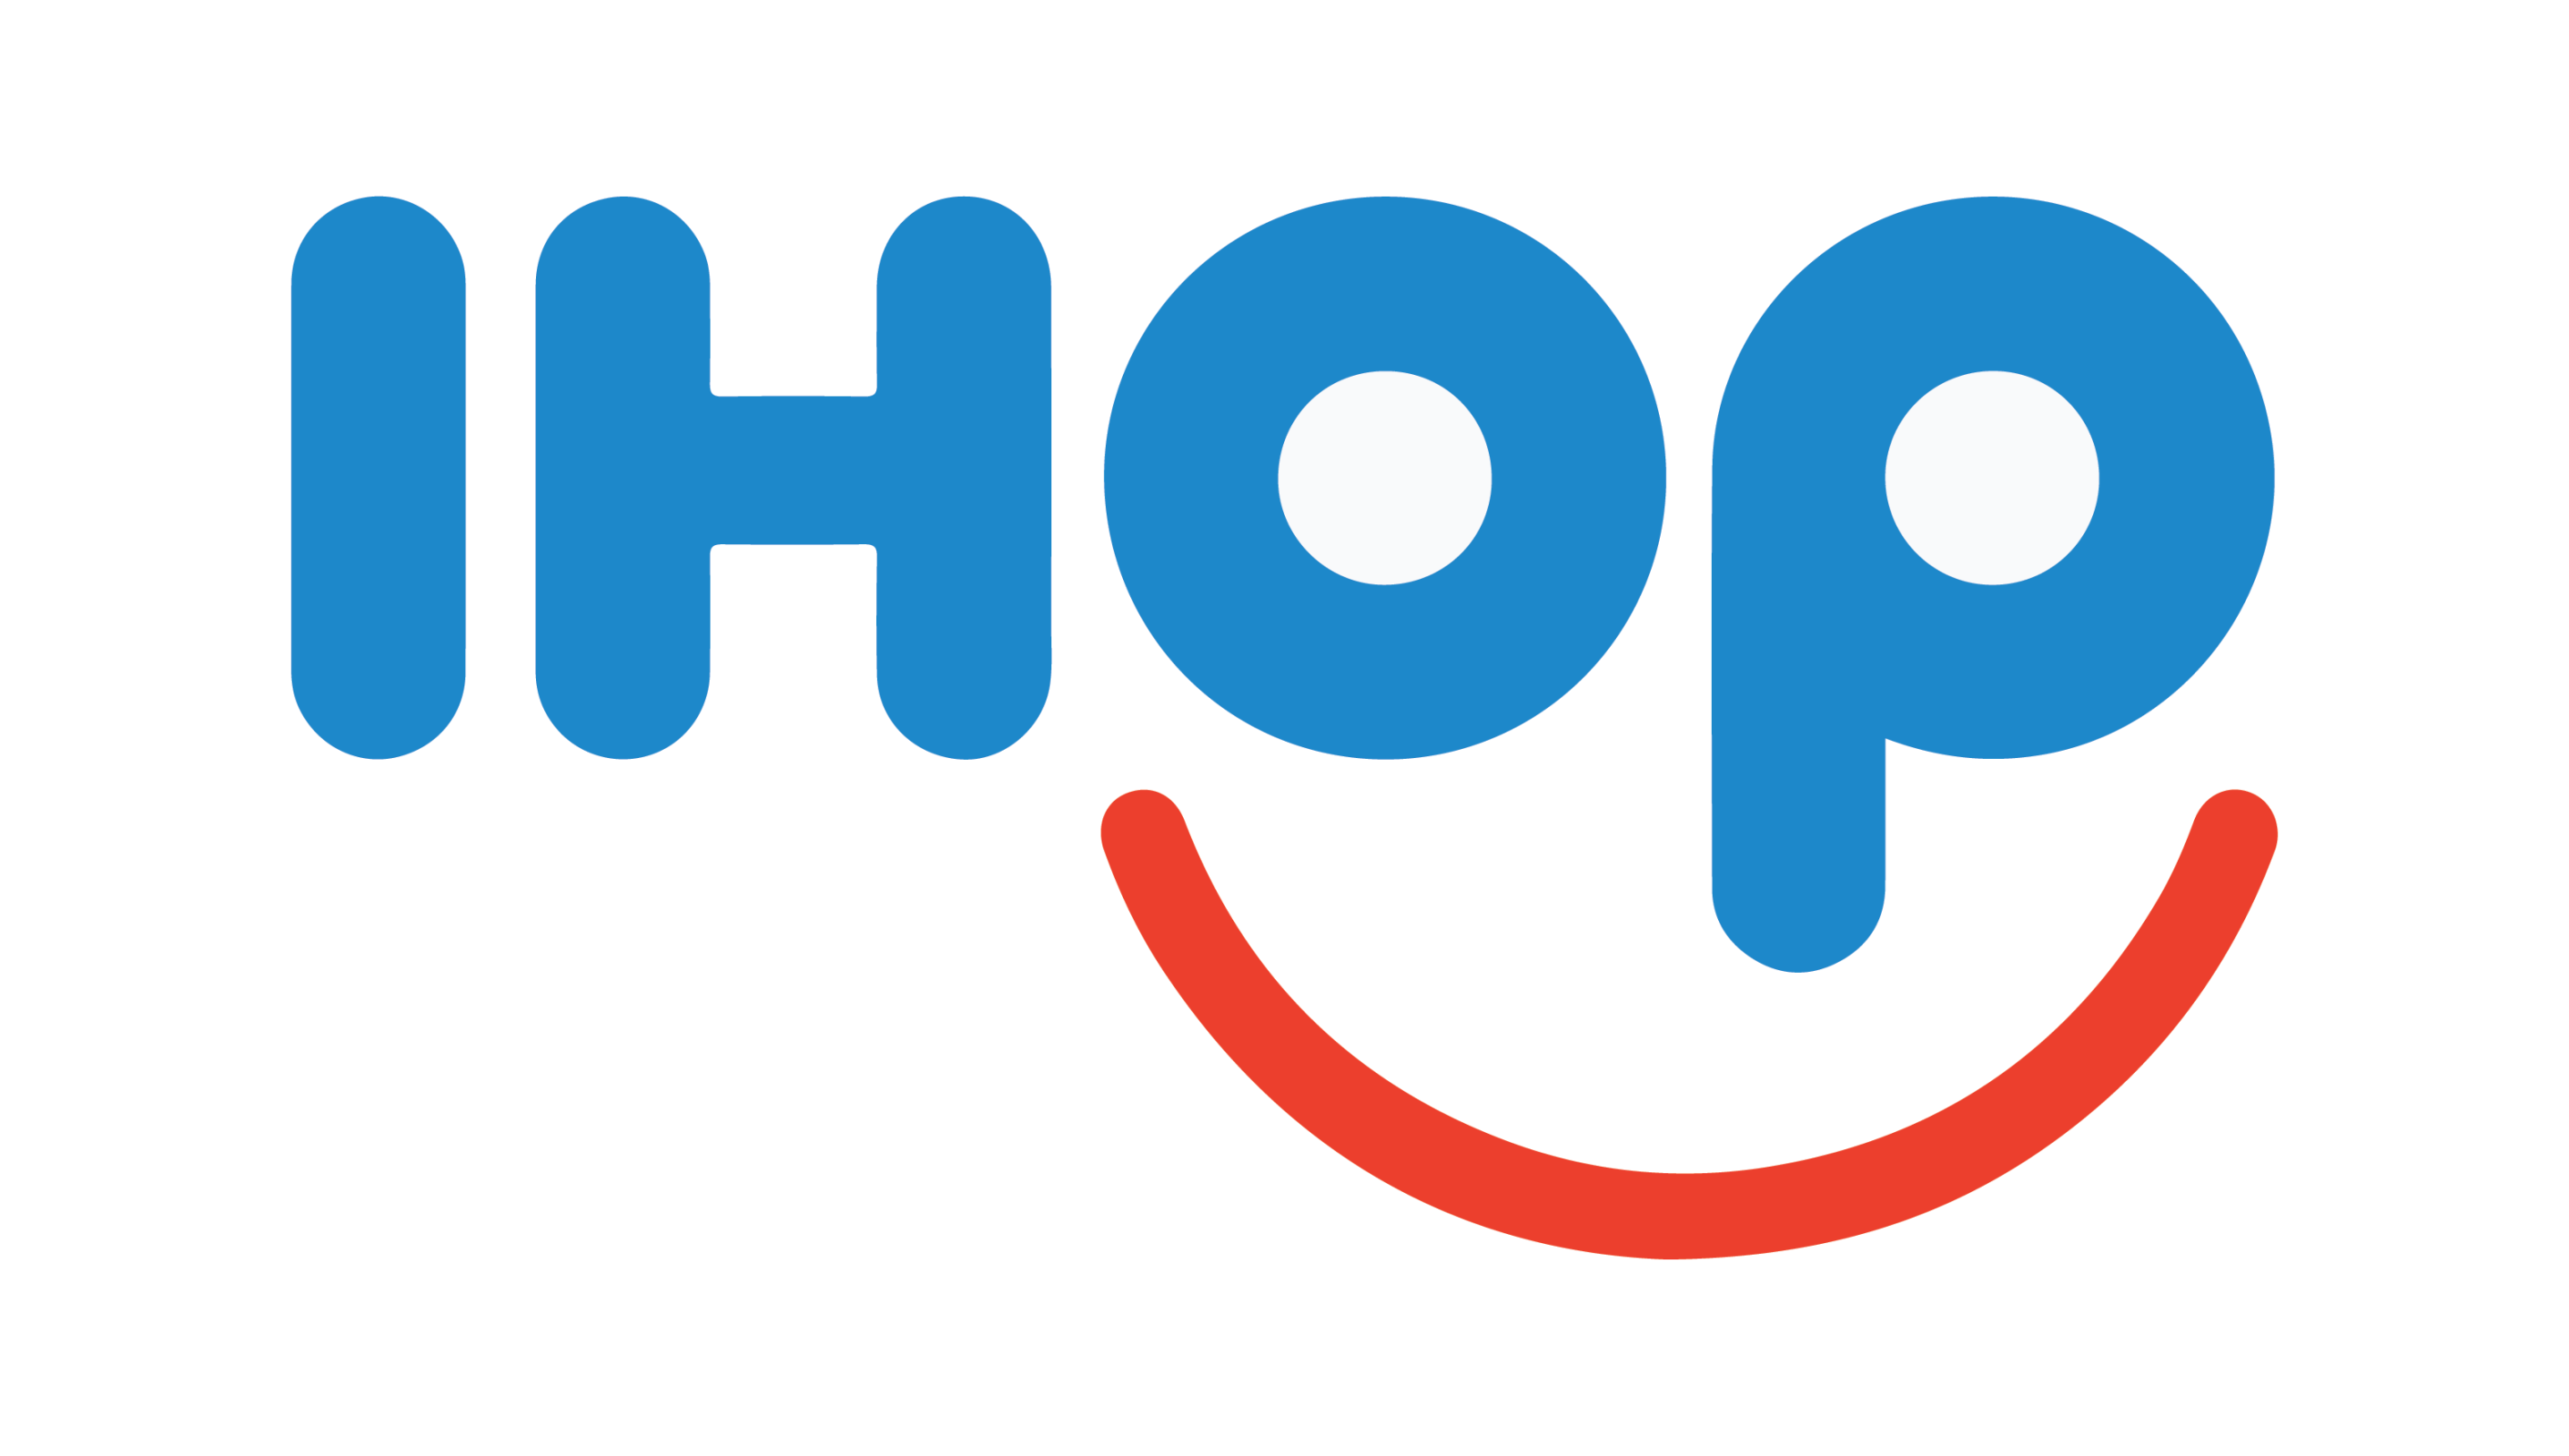 IHOP's Logo